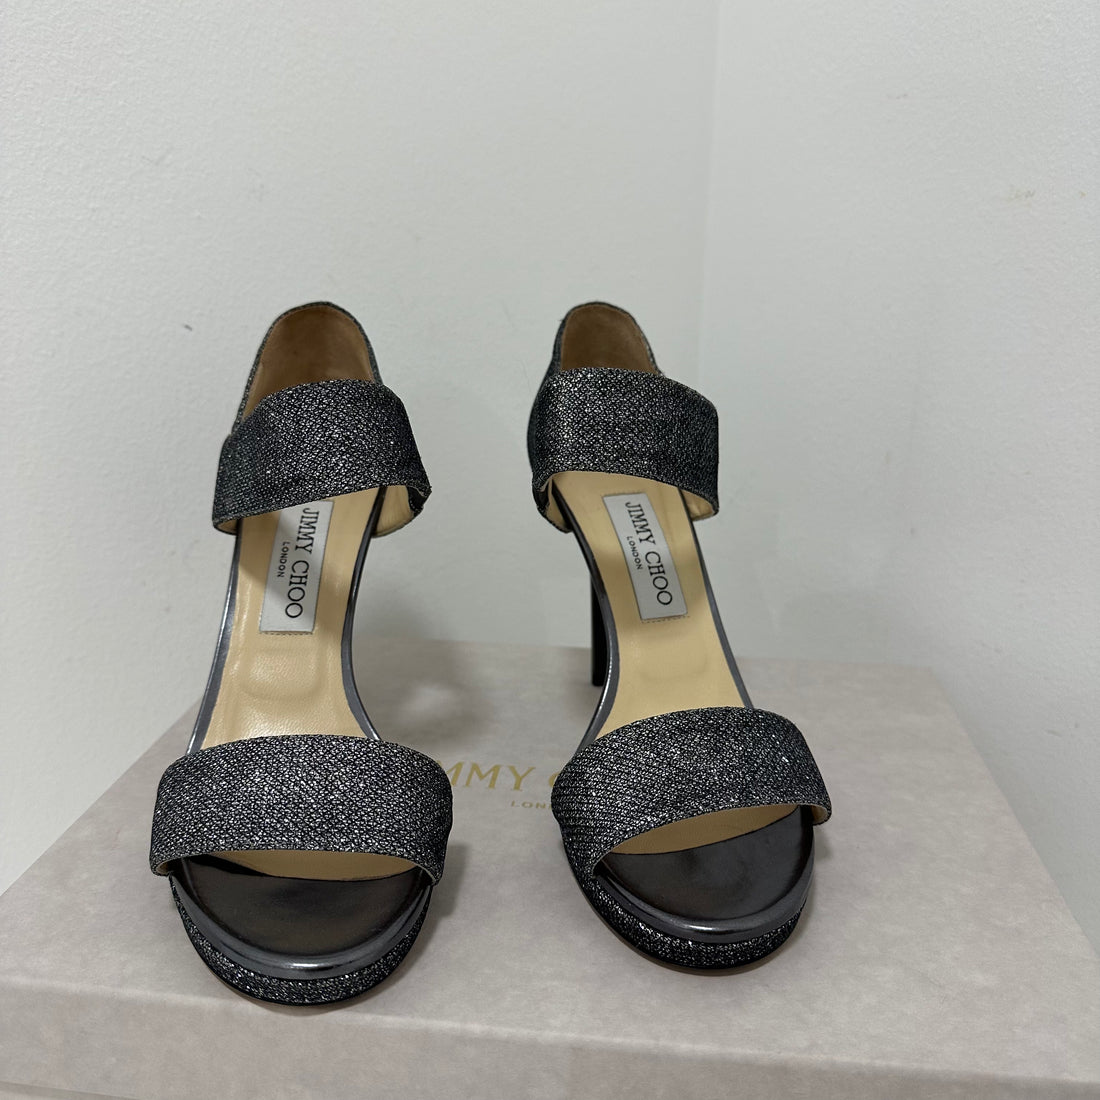 Jimmy Choo - Alana heeled sandals